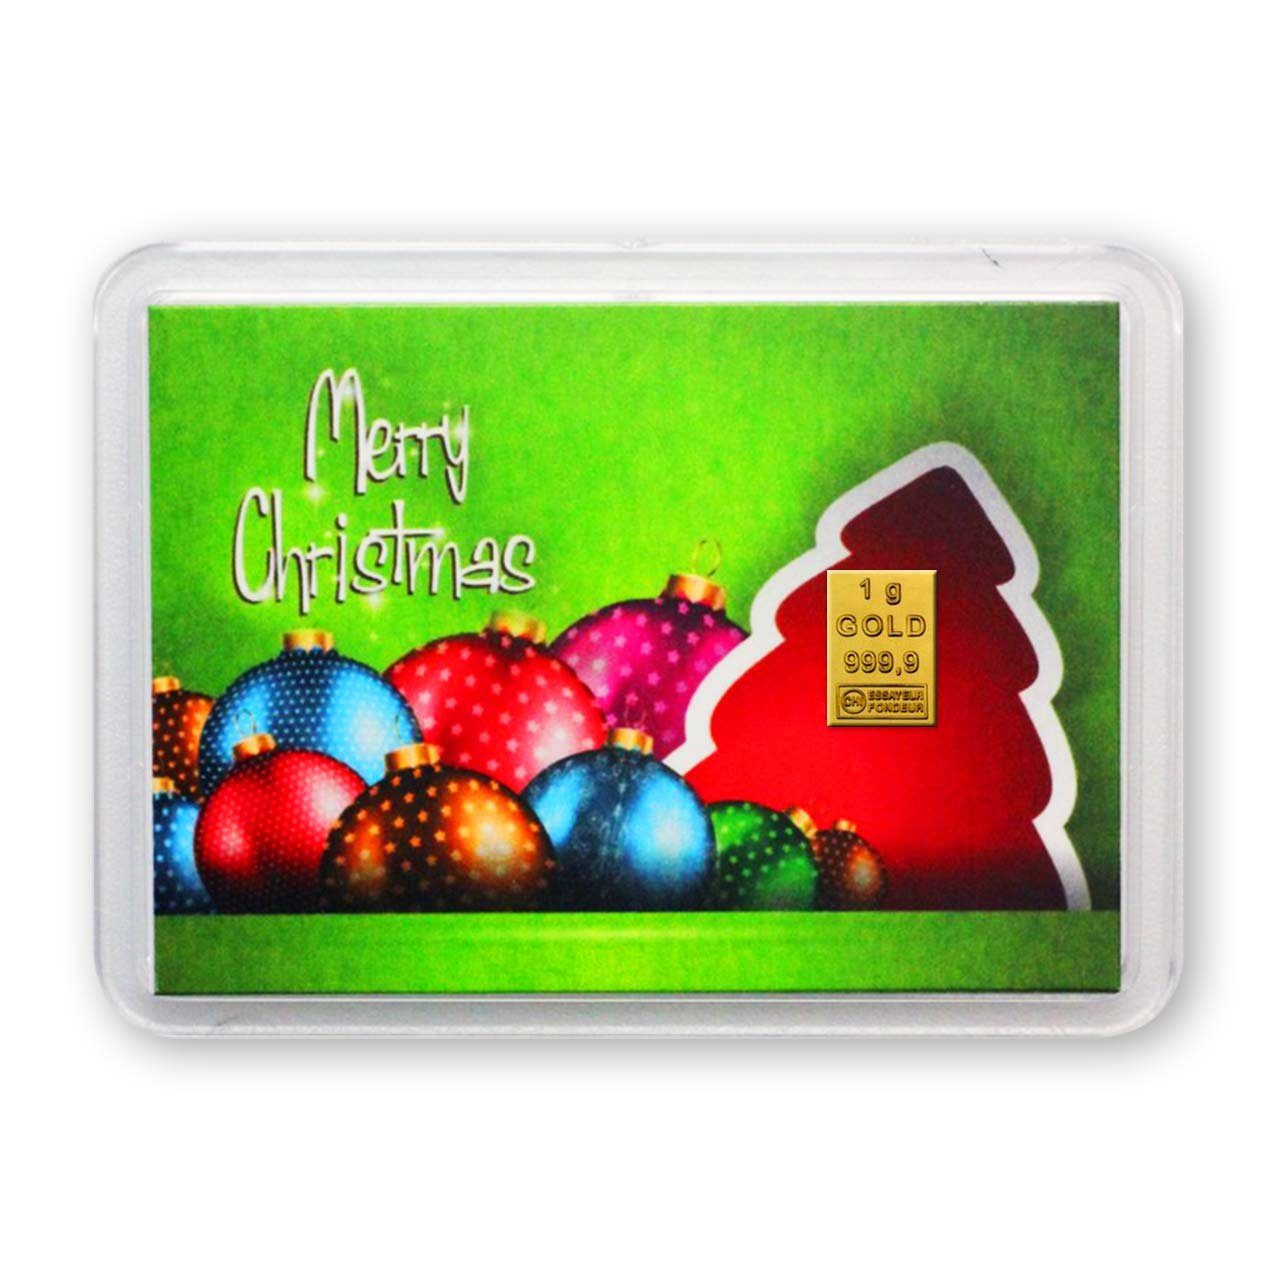 Goldschulz Grußkarten 1 Gramm Gold Motivbox / Grußkarte Merry Christmas Kugeln | Papier